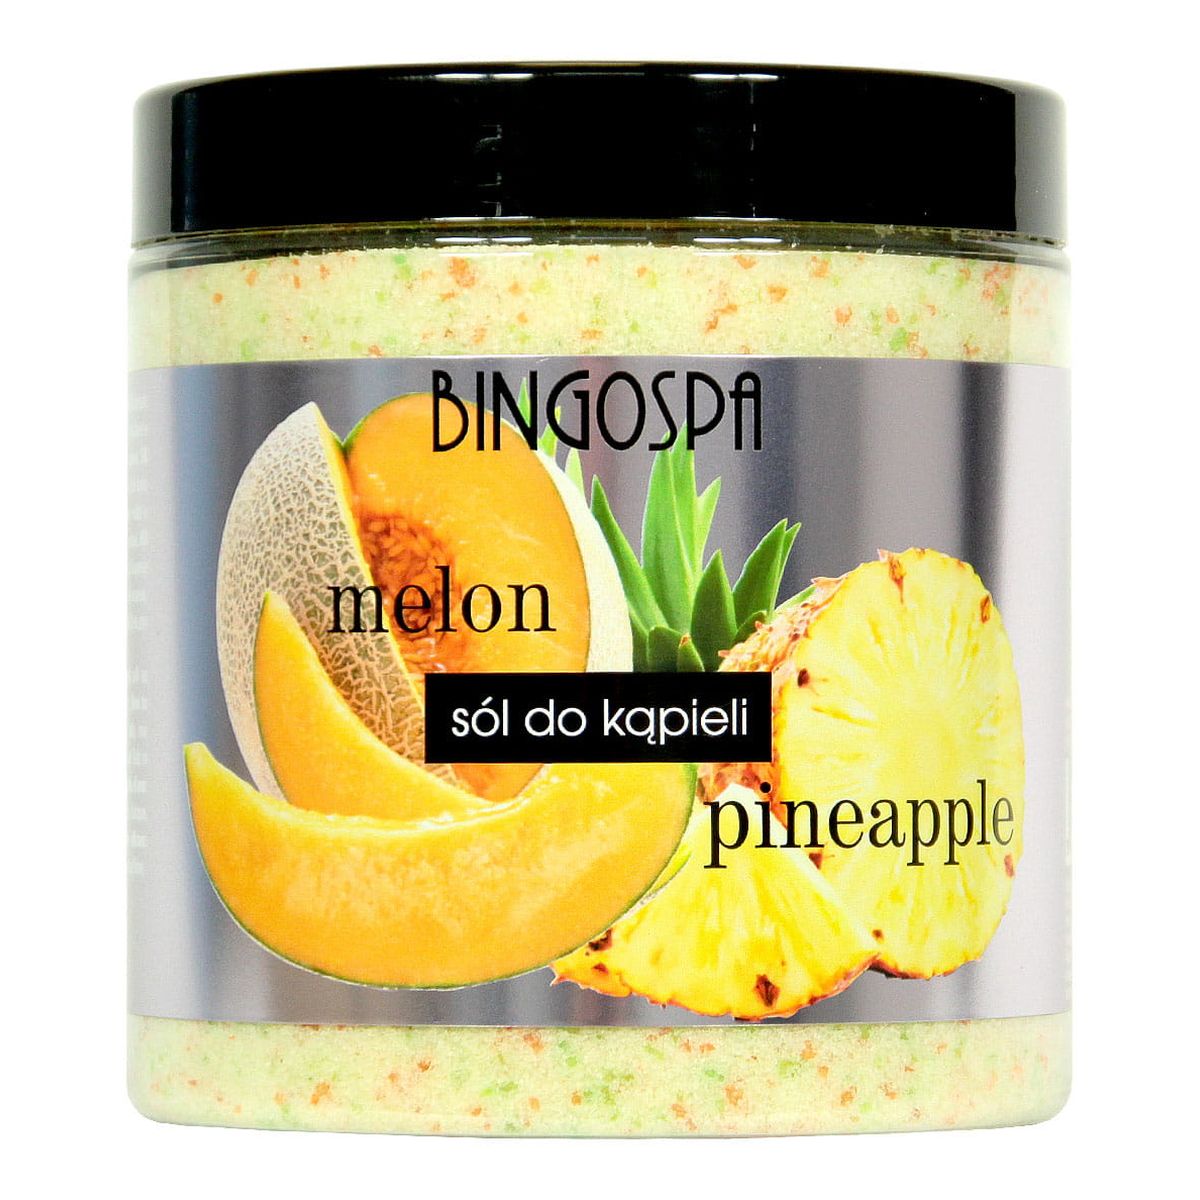 BingoSpa Sól do kąpieli melon & pineapple 900g 900g